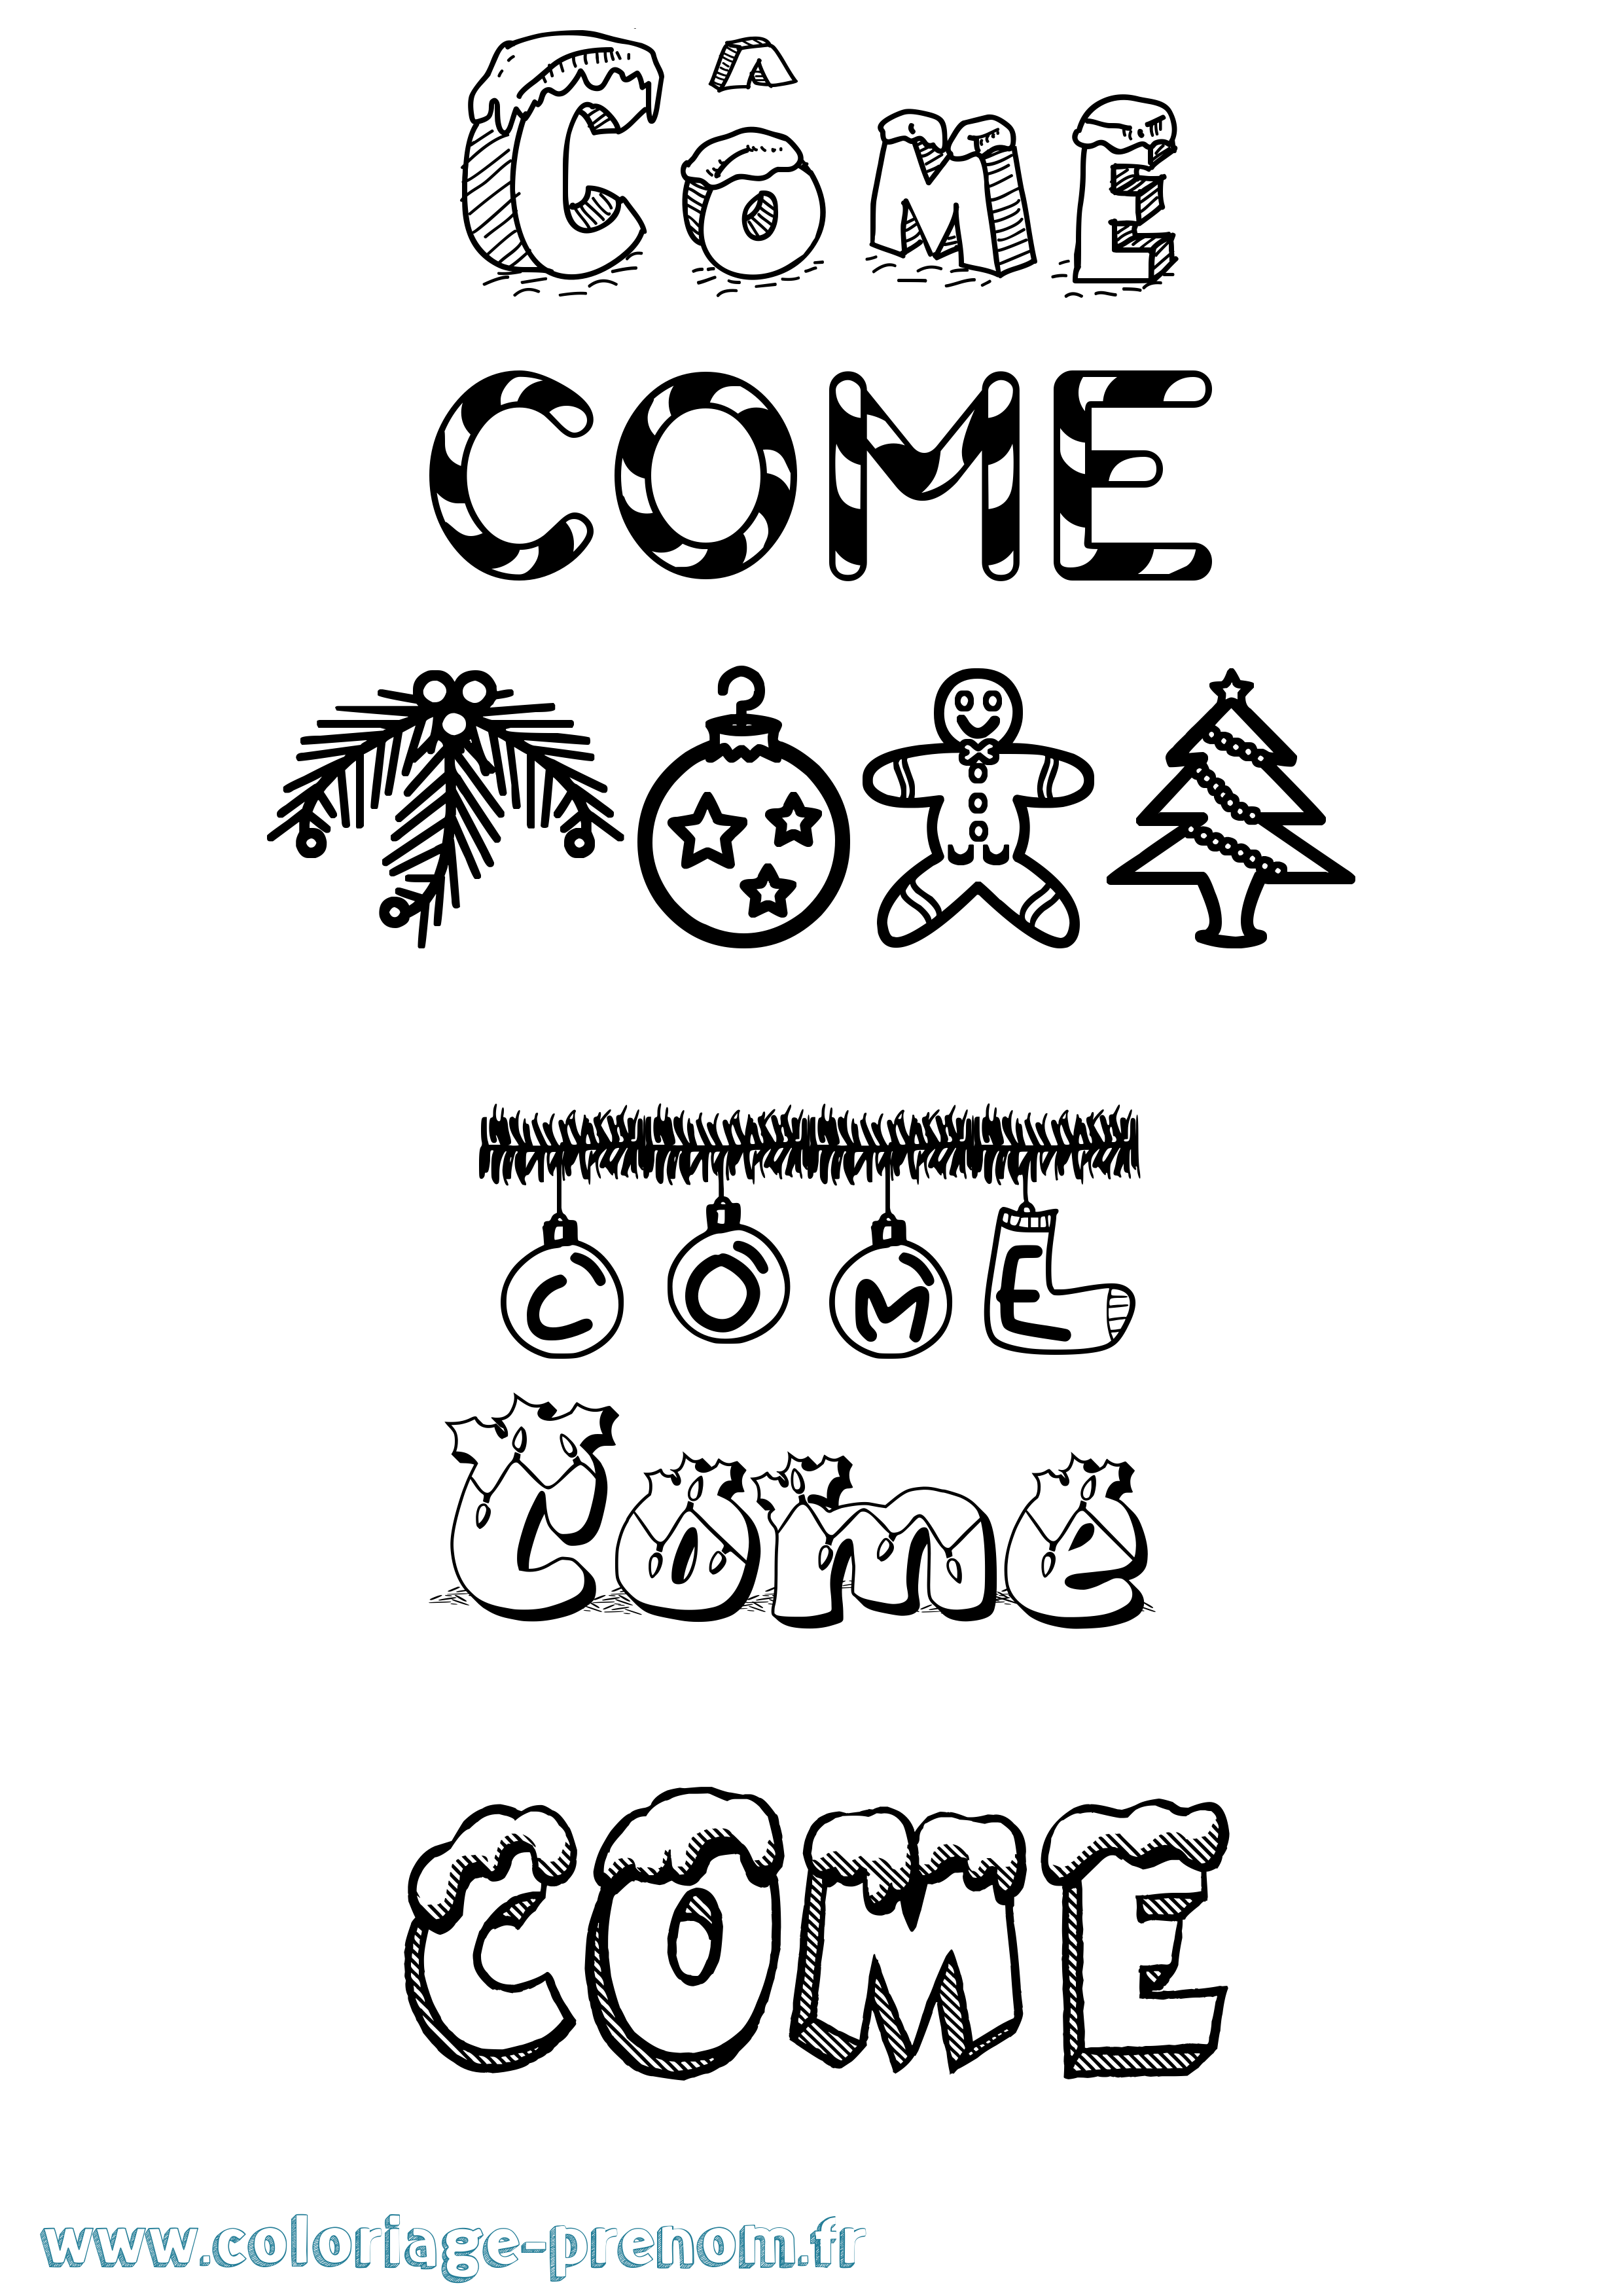 Coloriage prénom Côme